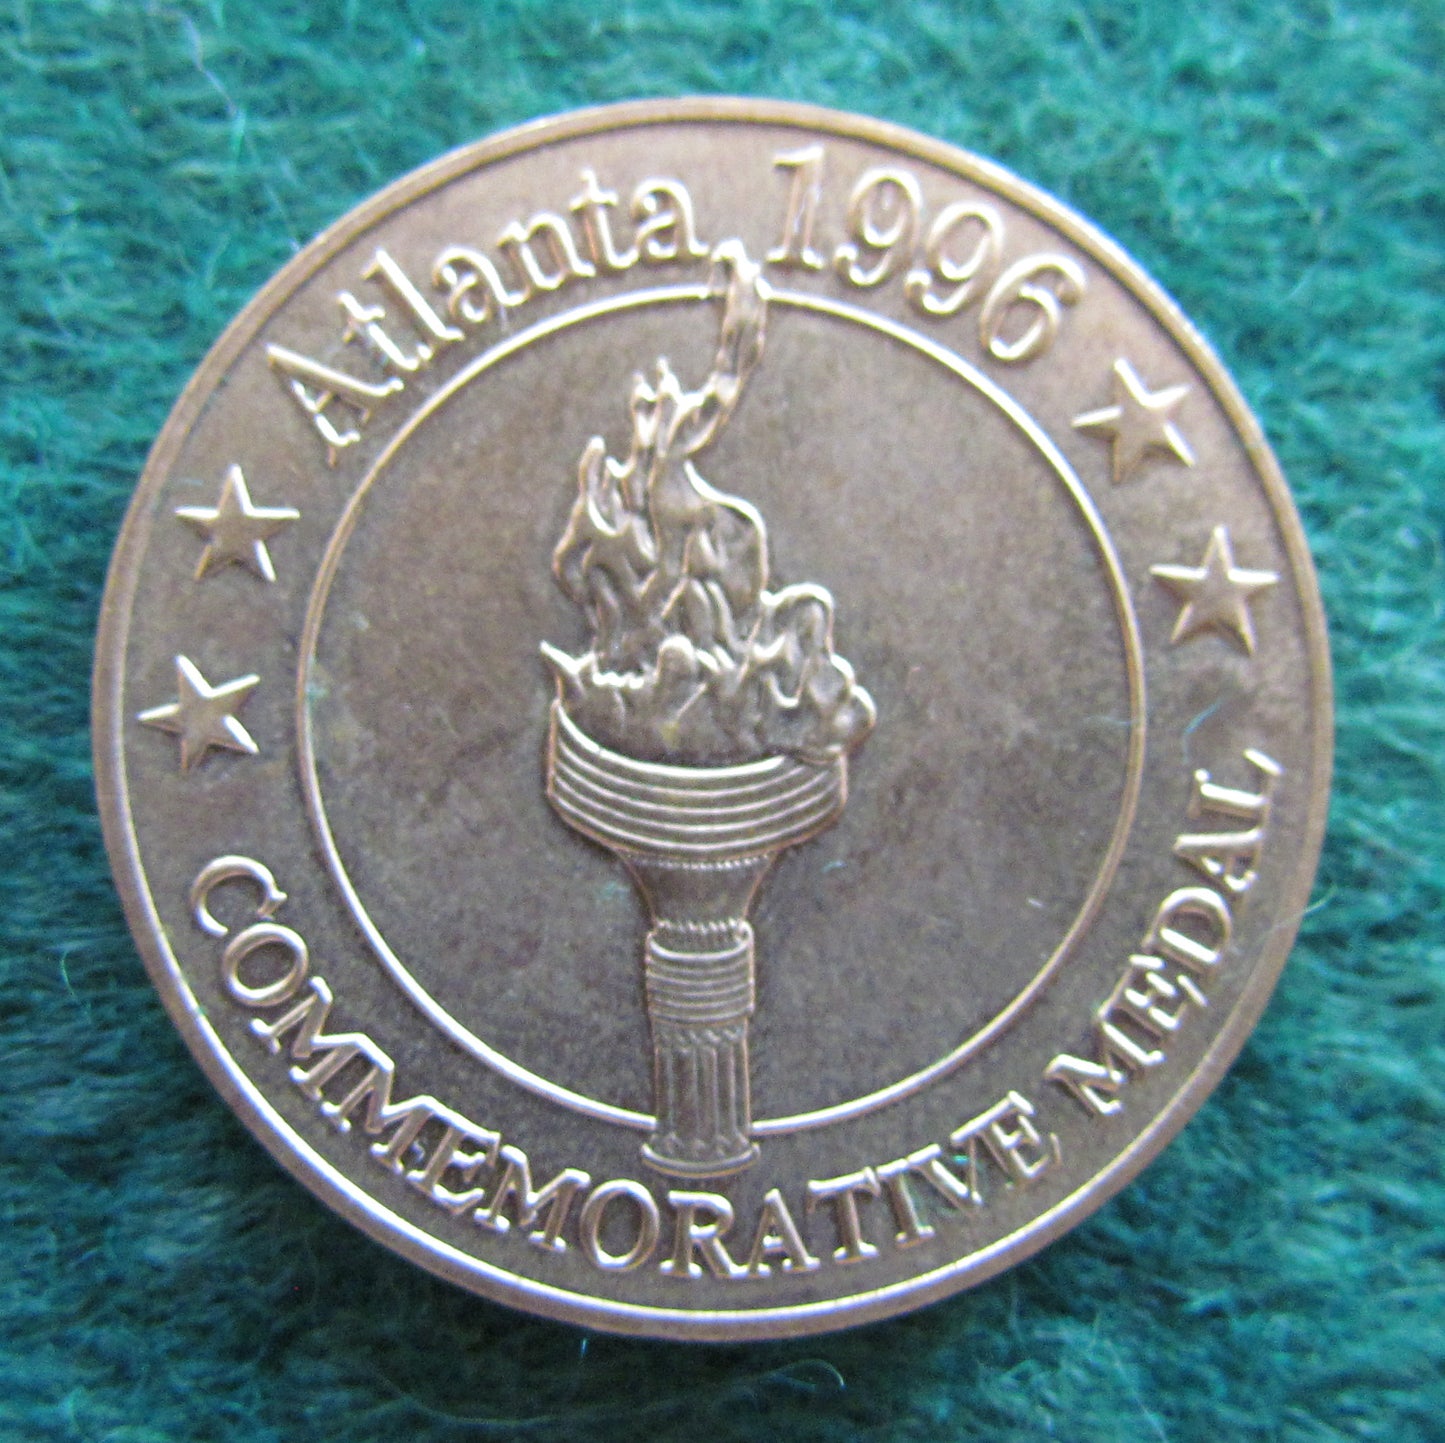 Atlanta 1996 Commemorative Medal - Sunday Telegraph